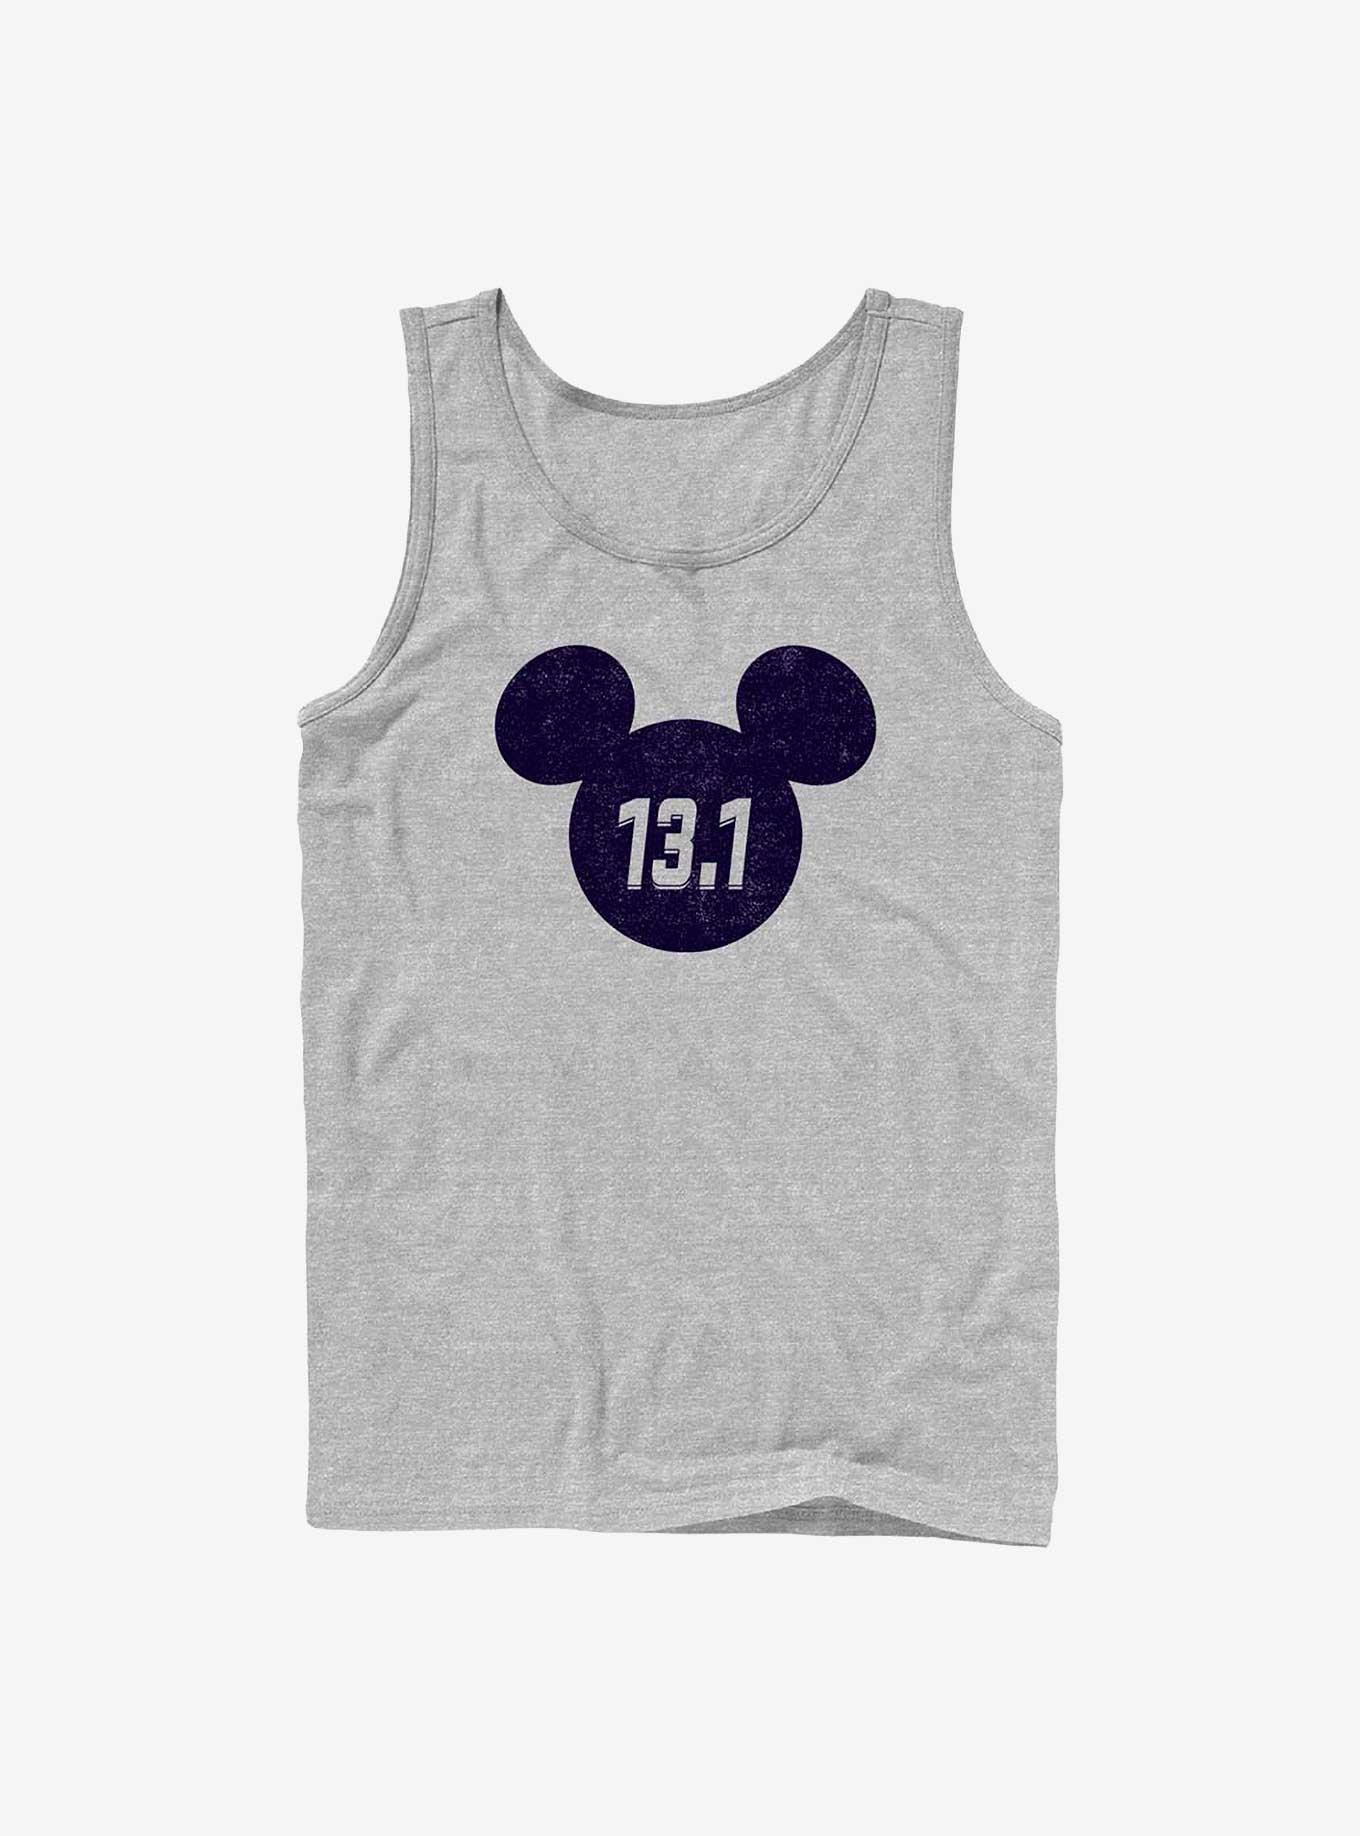 Disney Mickey Mouse 13.1 Half Marathon Ears Tank